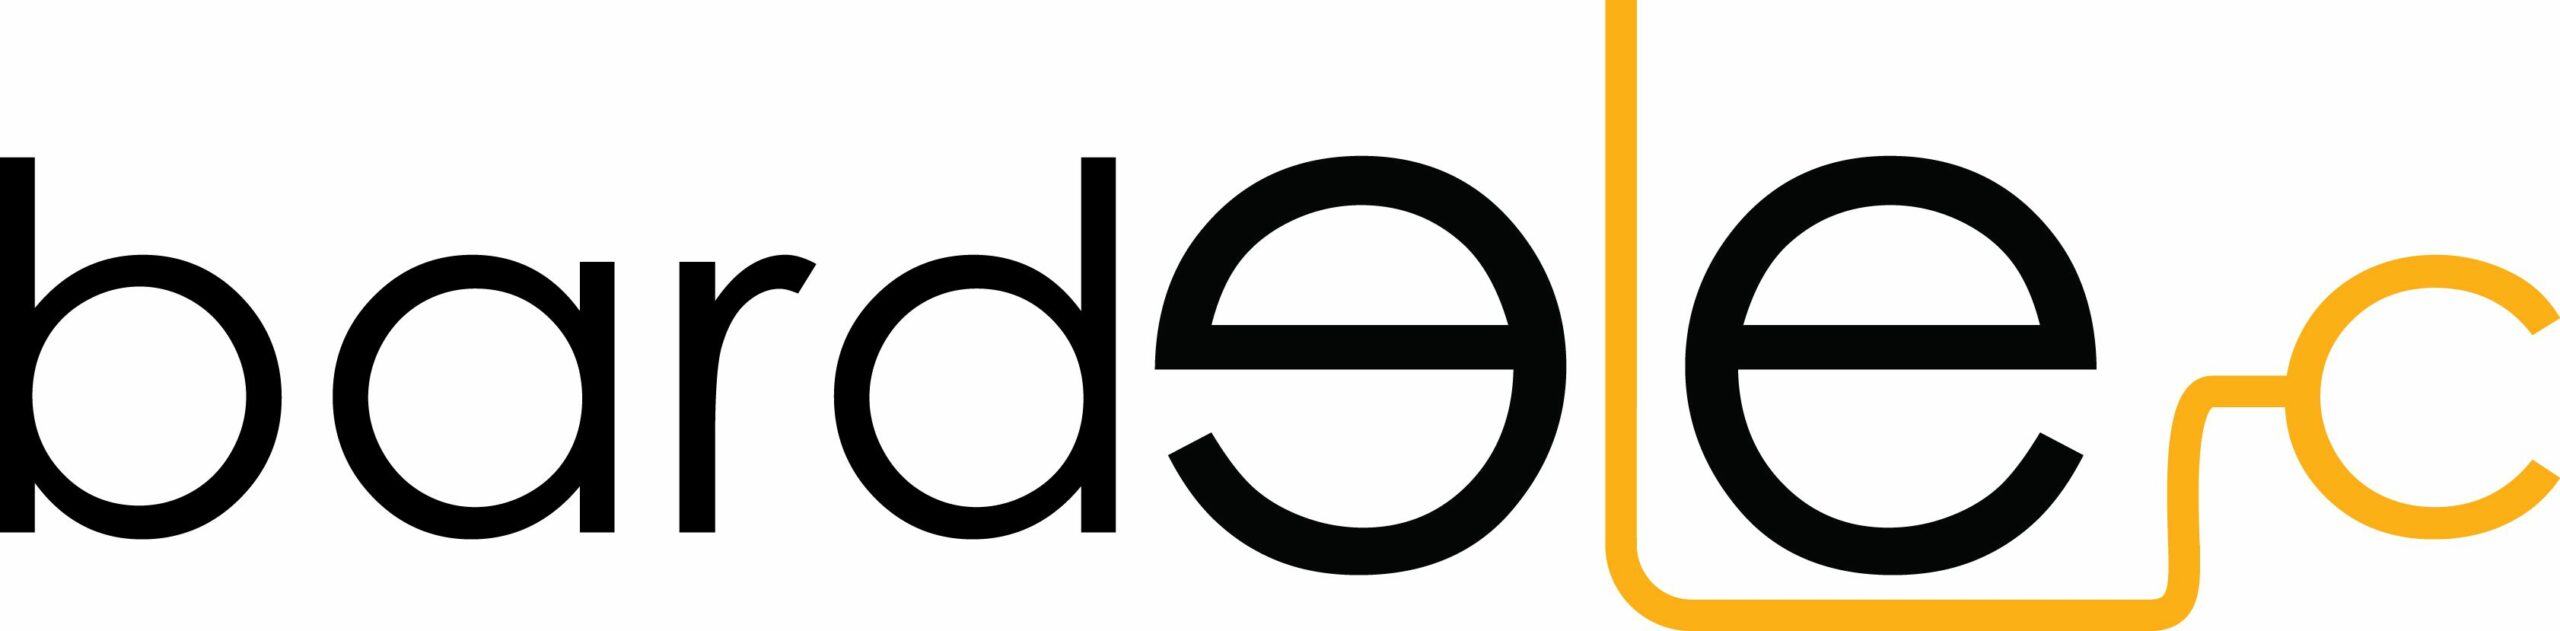 bardelec-logo